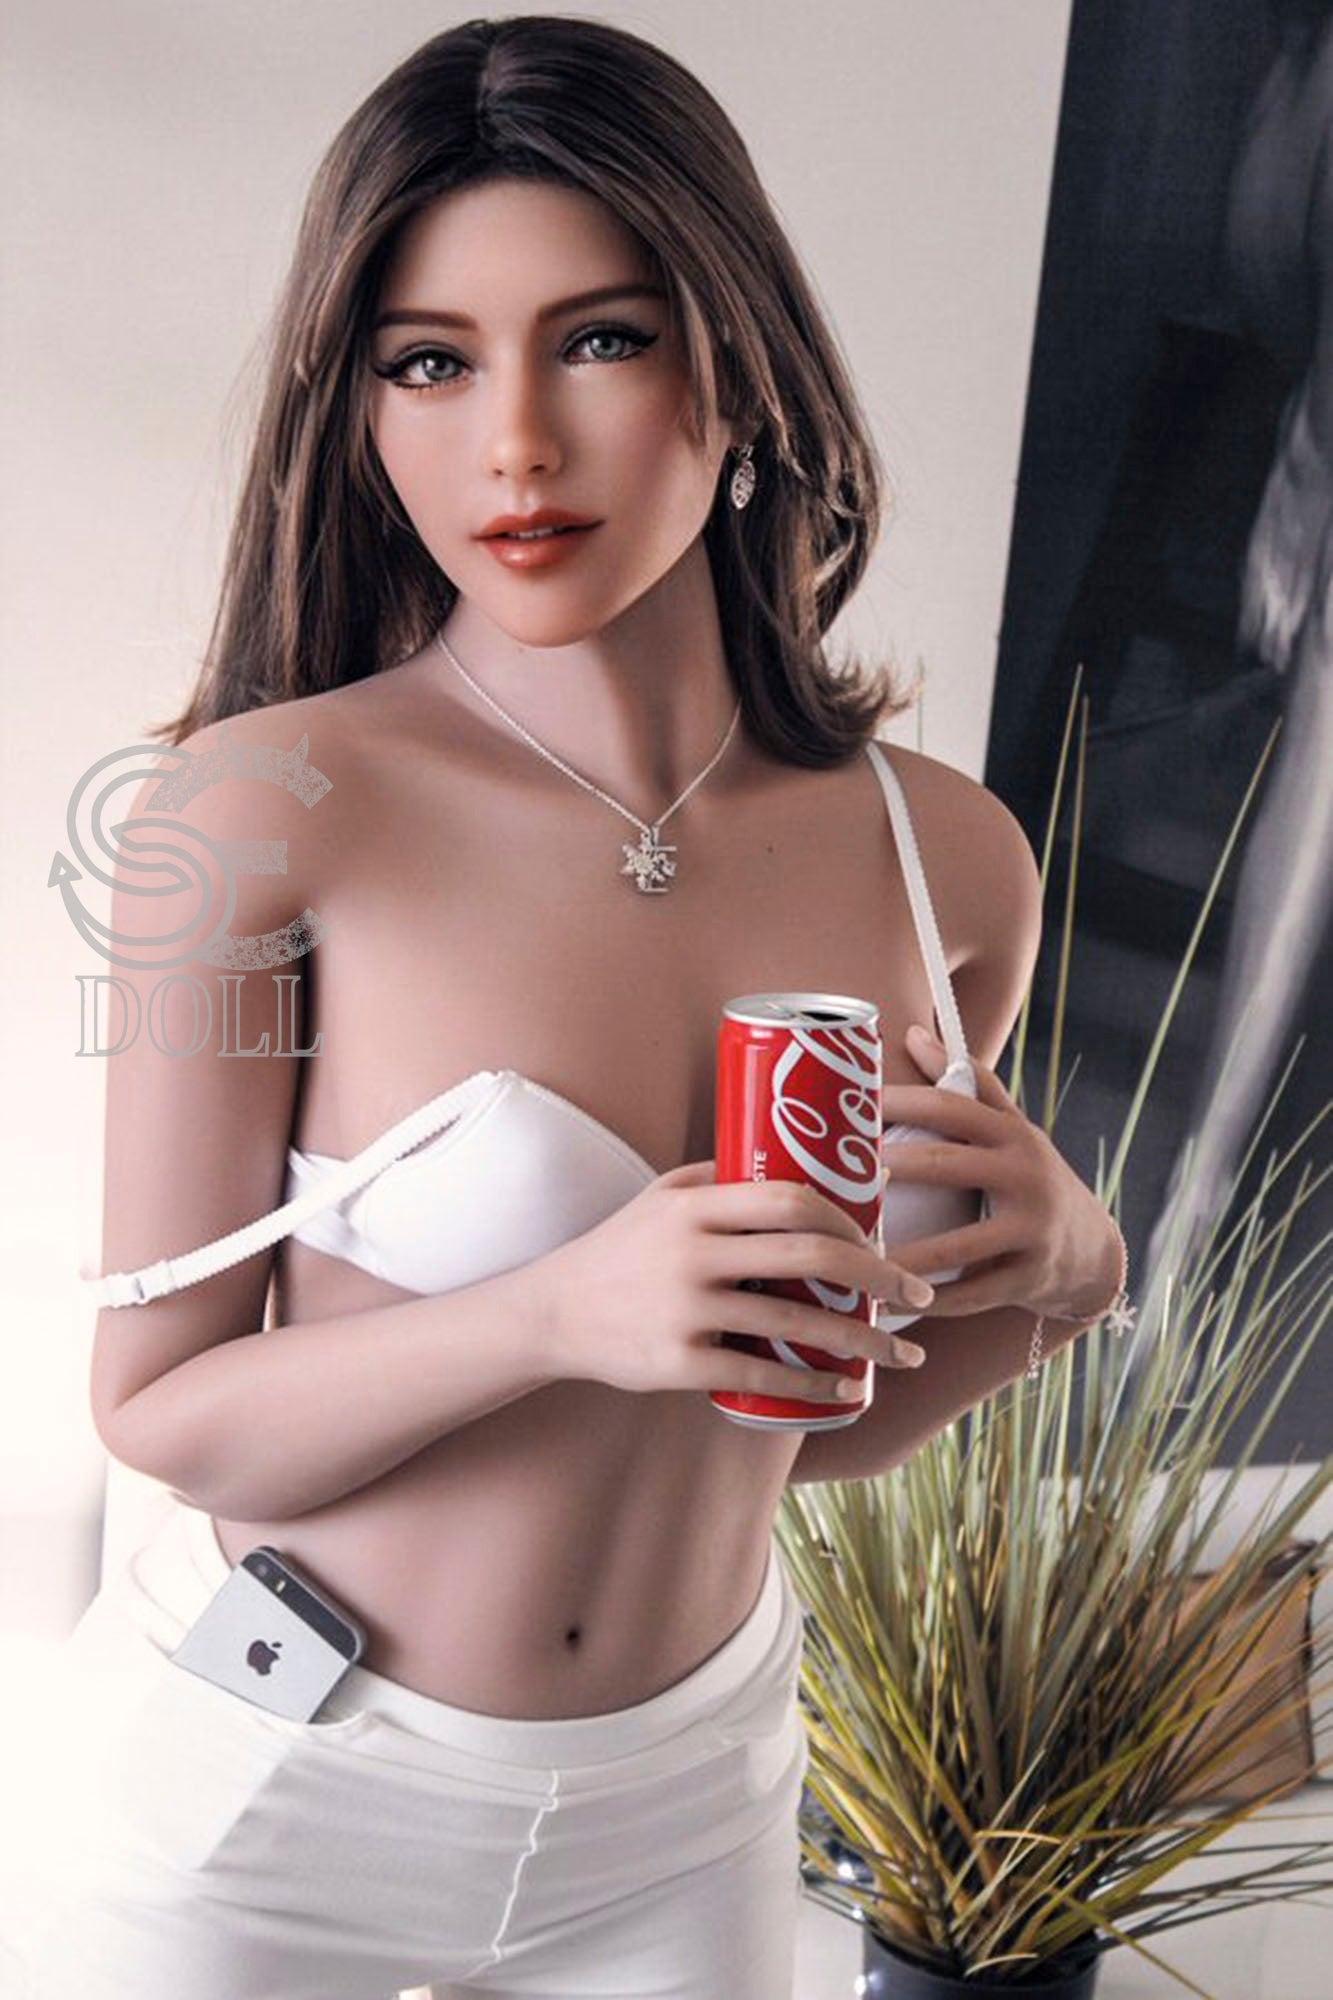 SEDOLL 163 cm E TPE - Annika | Buy Sex Dolls at DOLLS ACTUALLY